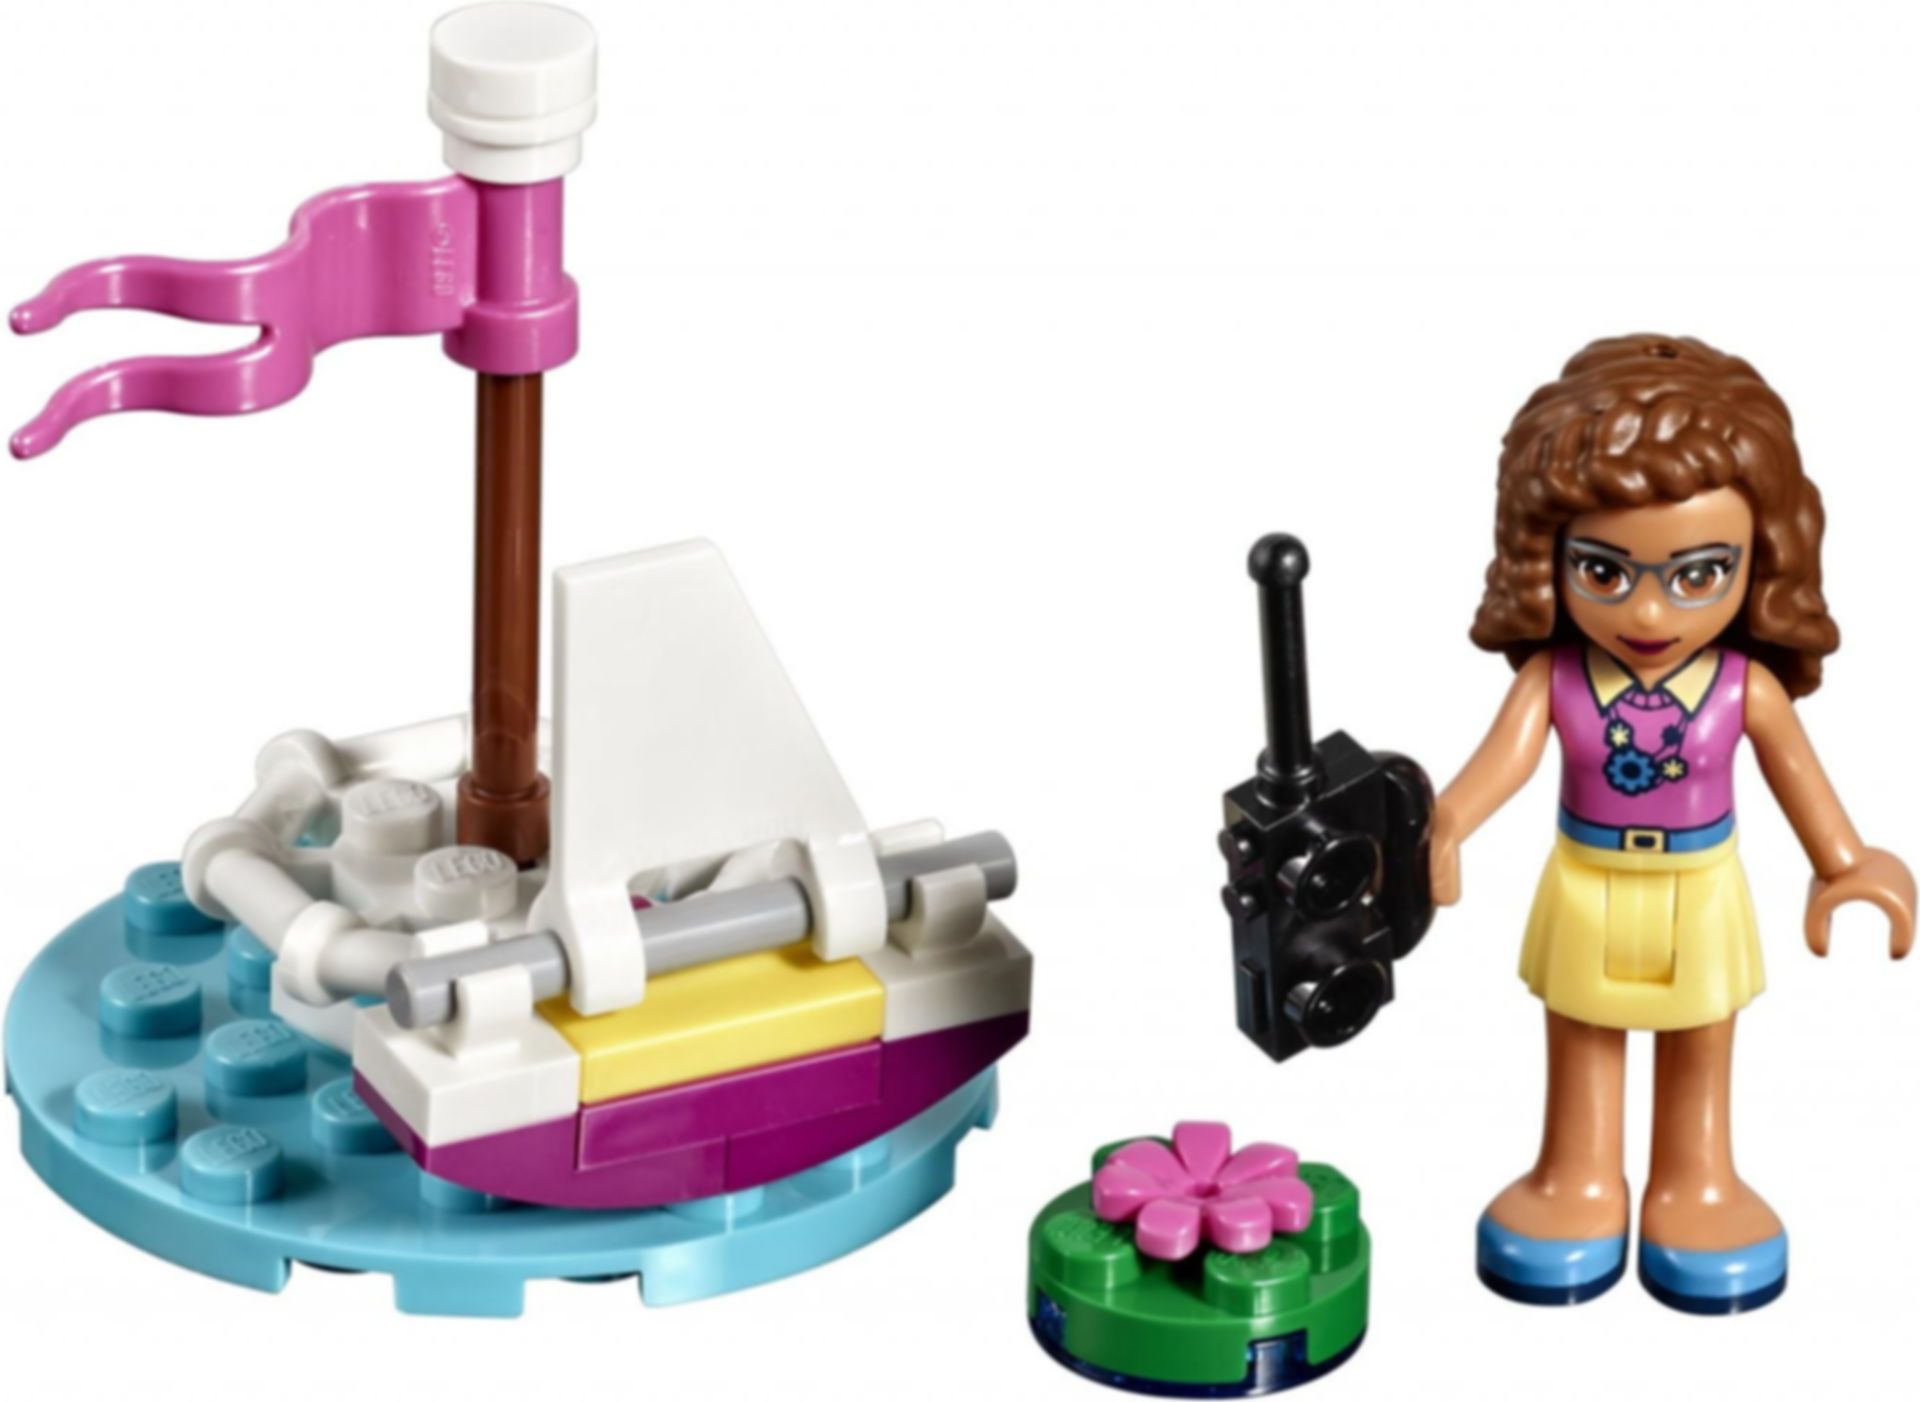 LEGO® Friends Olivia's Remote Control Boat components